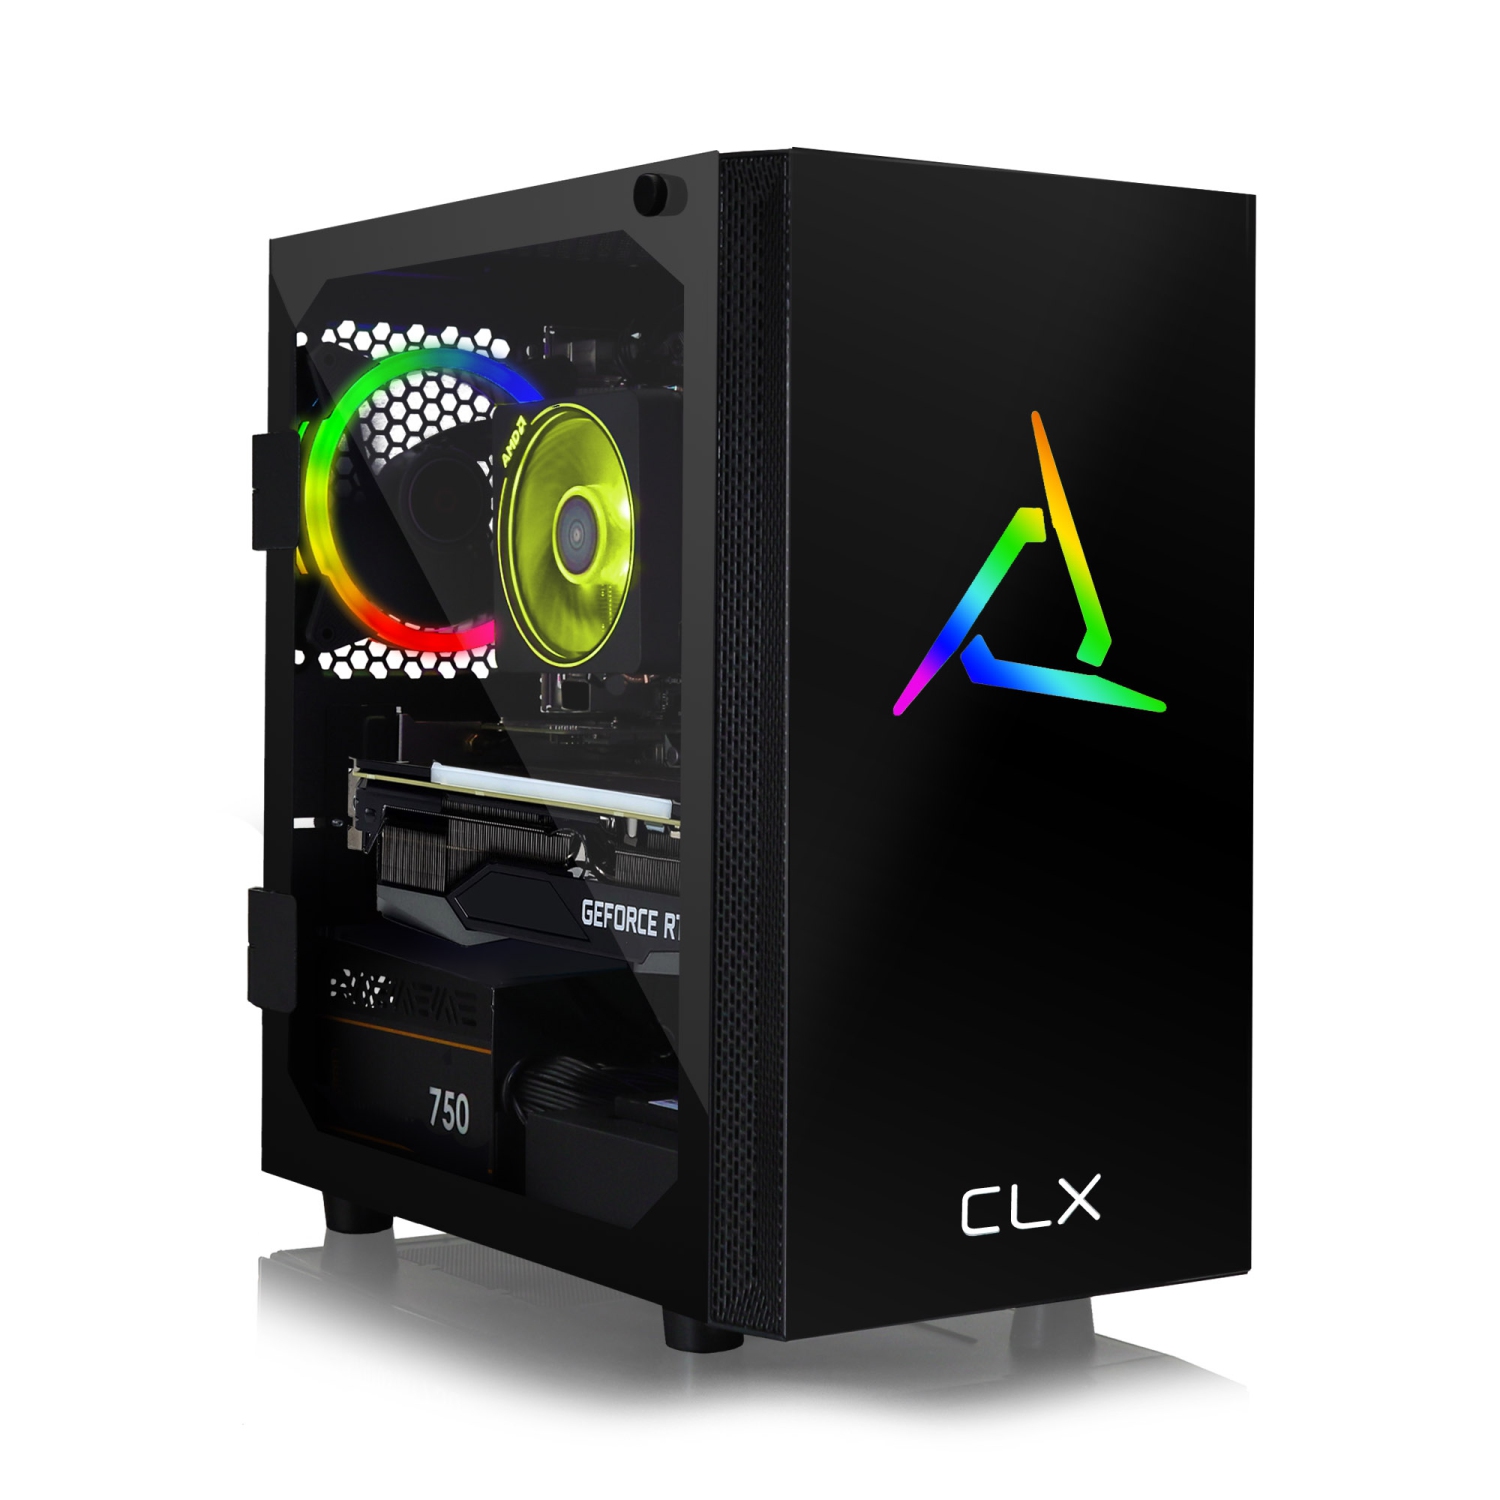 CLX SET VR-Ready Gaming Desktop - AMD Ryzen 9 3900X 3.8GHz 12-Core Processor, 16GB DDR4 Memory, GeForce RTX 3060 Ti 8GB GDDR6 Graphics, 480GB SSD, 2TB HDD, WiFi, Windows 10 Home 64-bit